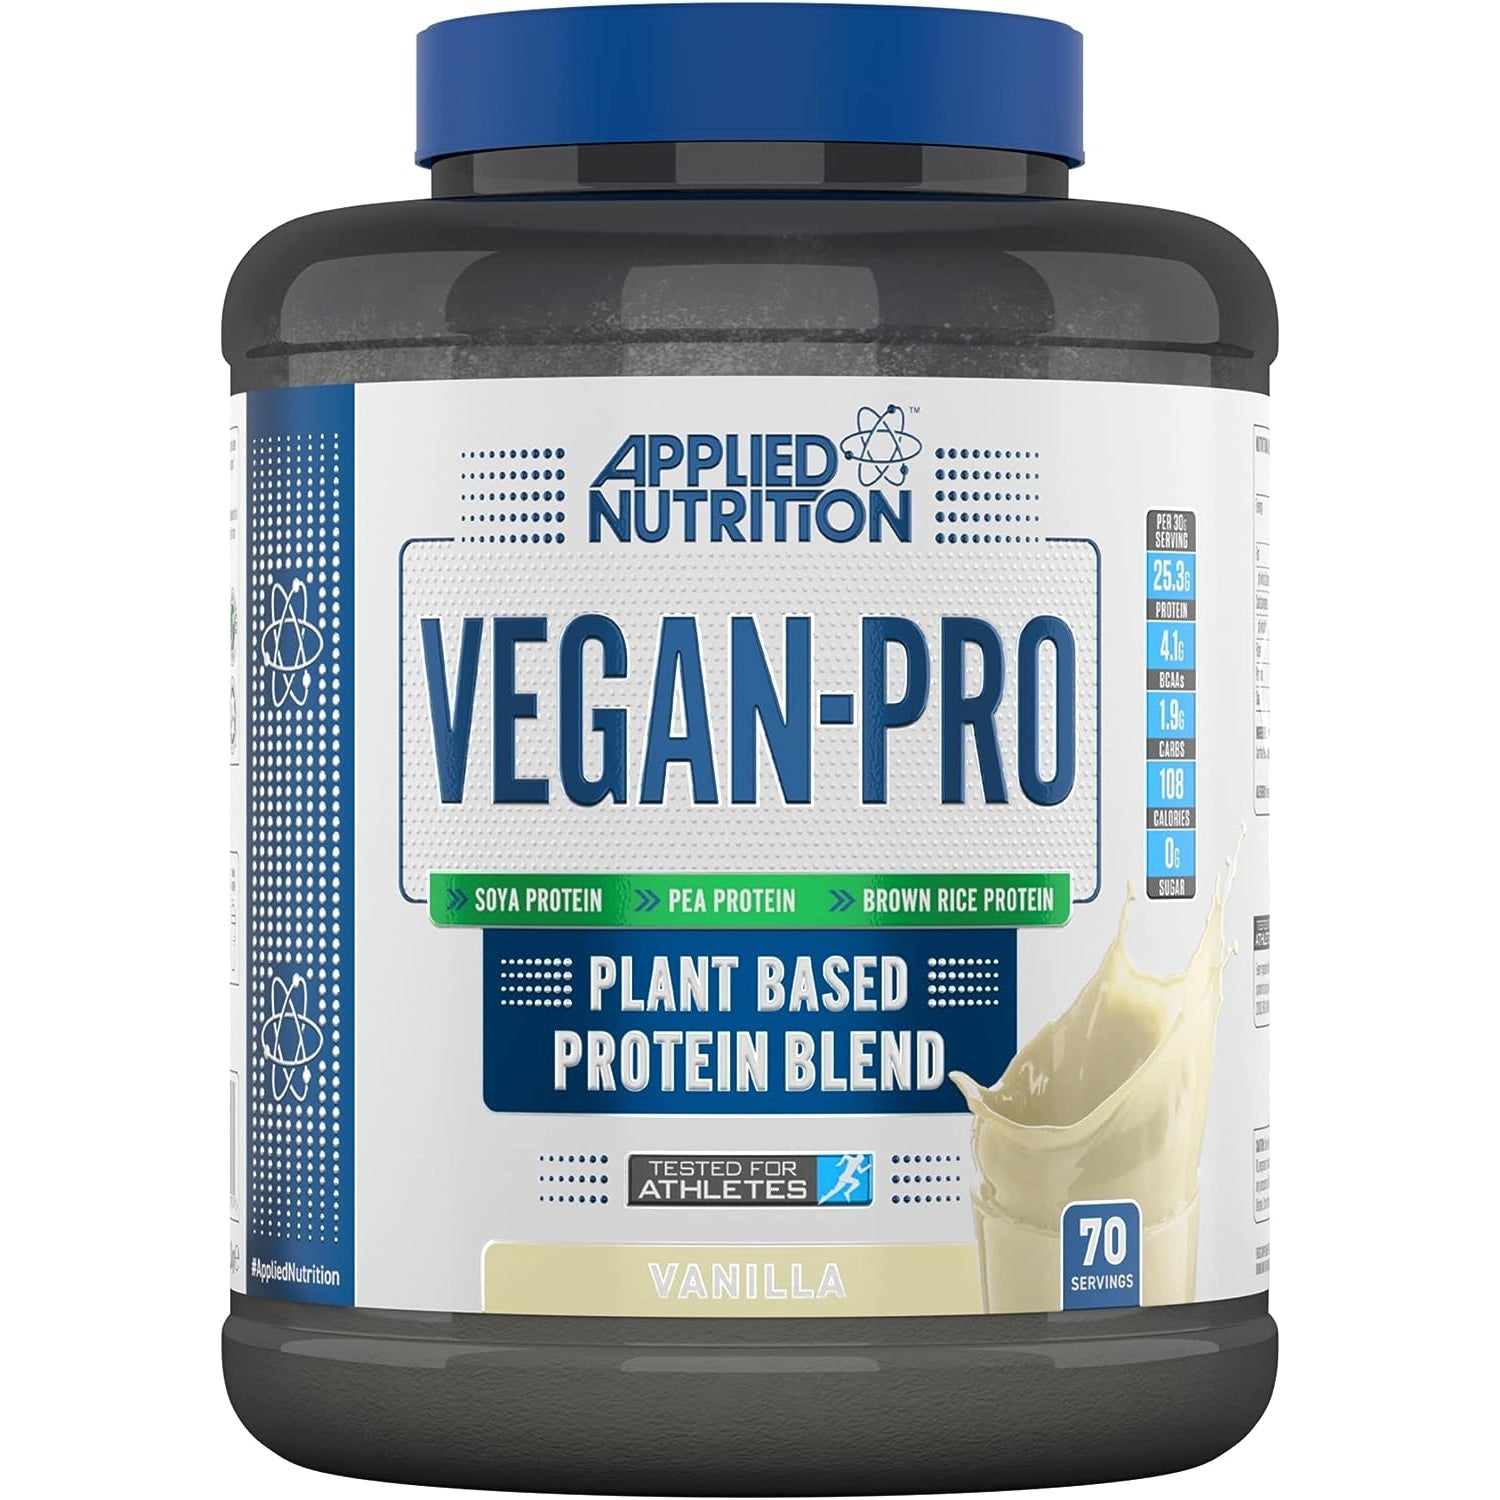 Applied Nutrition Vegan Pro Plant Based Protein Blend Vegan Vanilla 2.1kg - 70 Servings